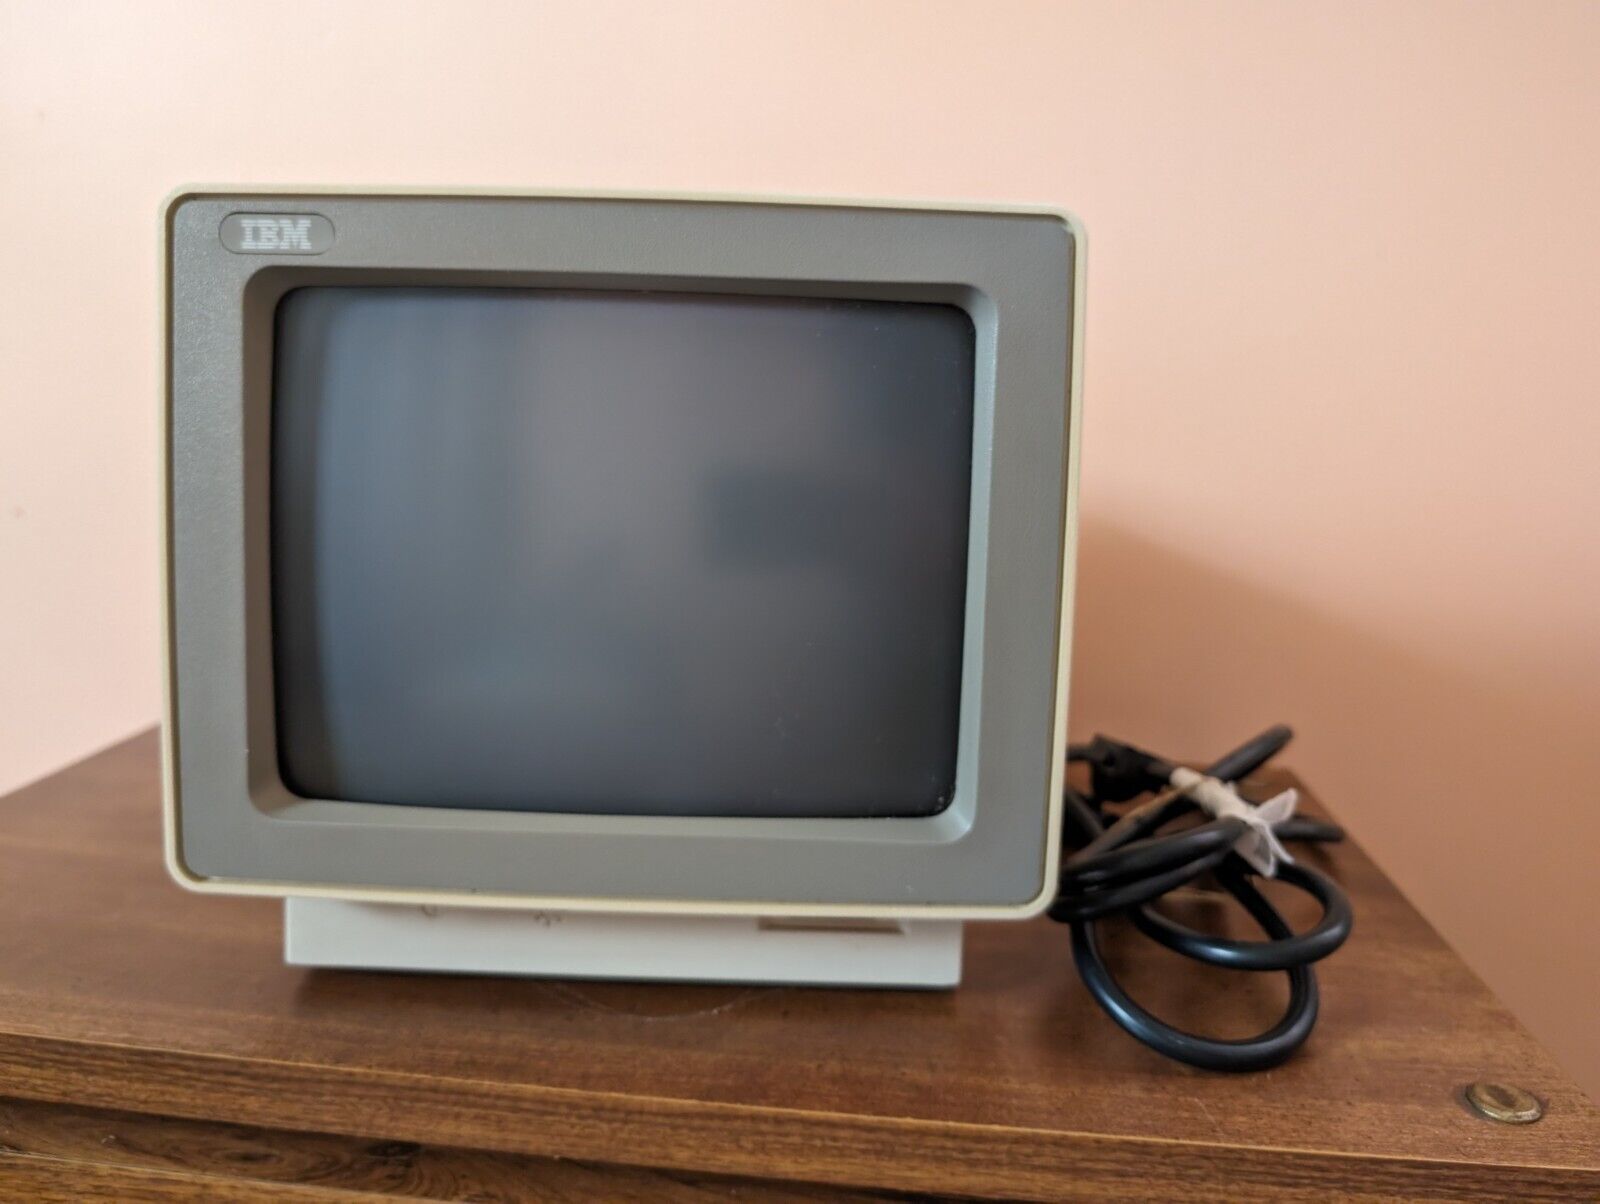 Vintage 1988 IBM 4707 CRT Monochrome Monitor - Working